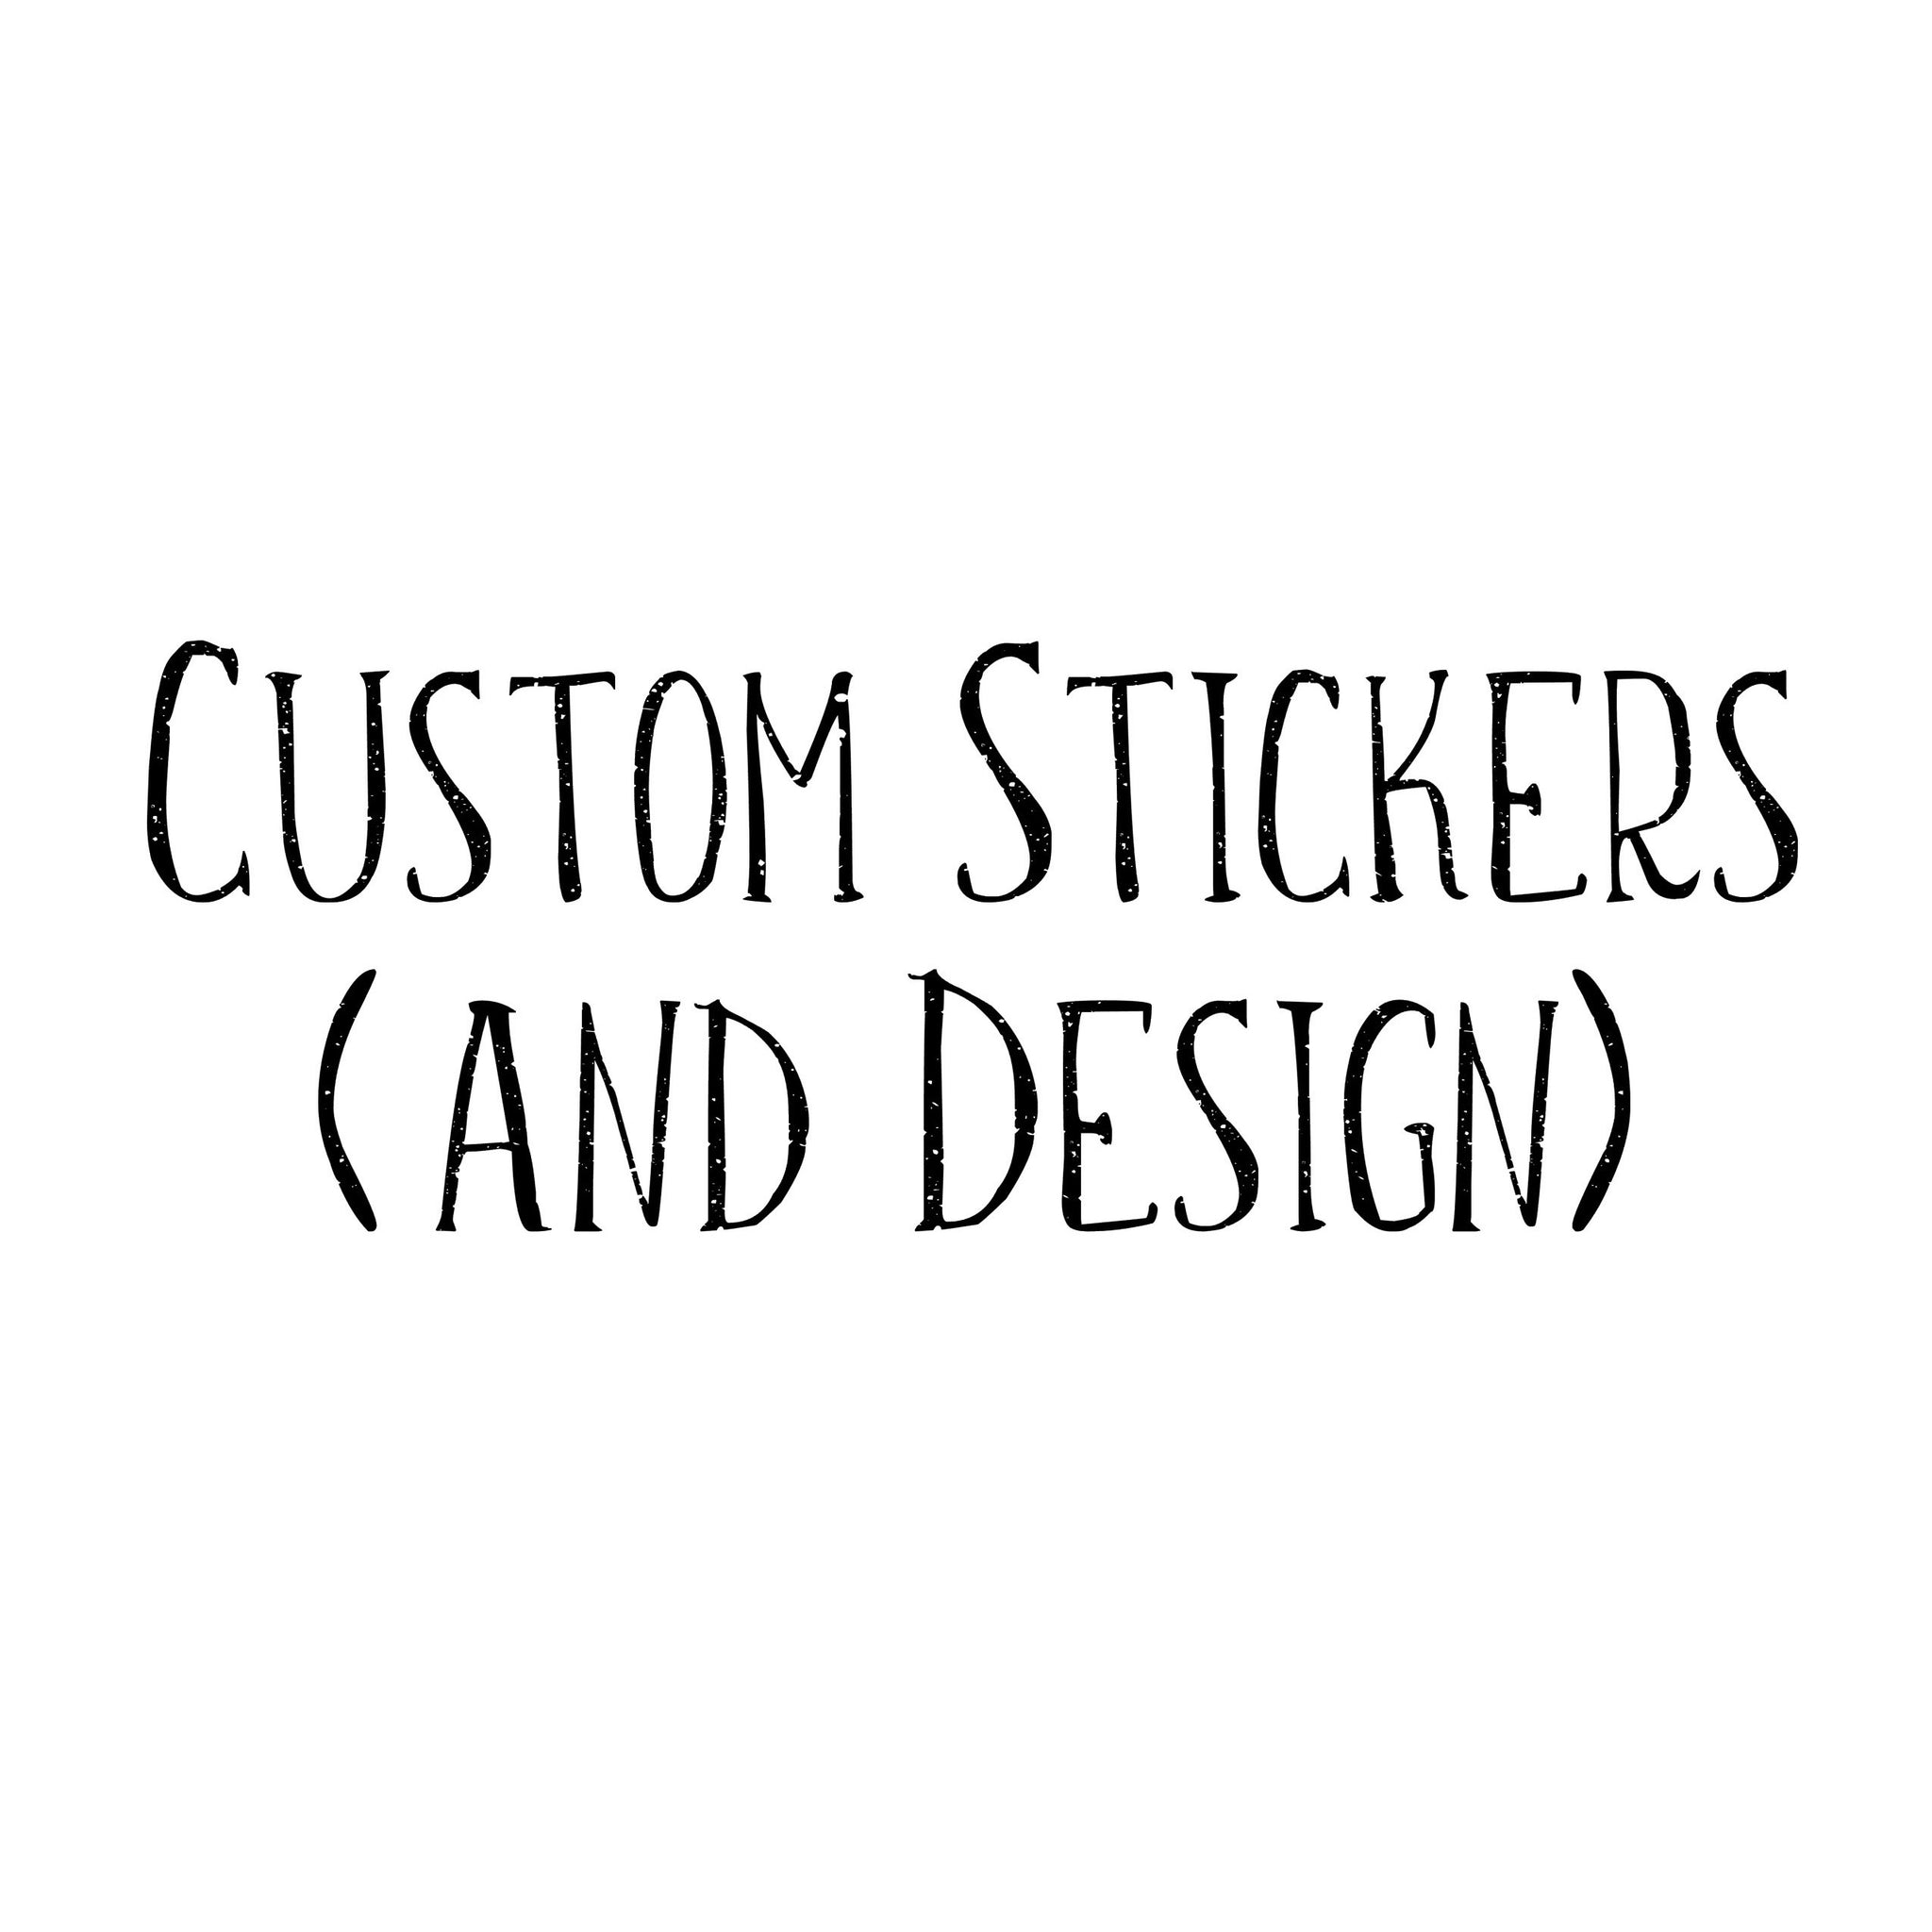 Custom Stickers & Design (Please Contact)